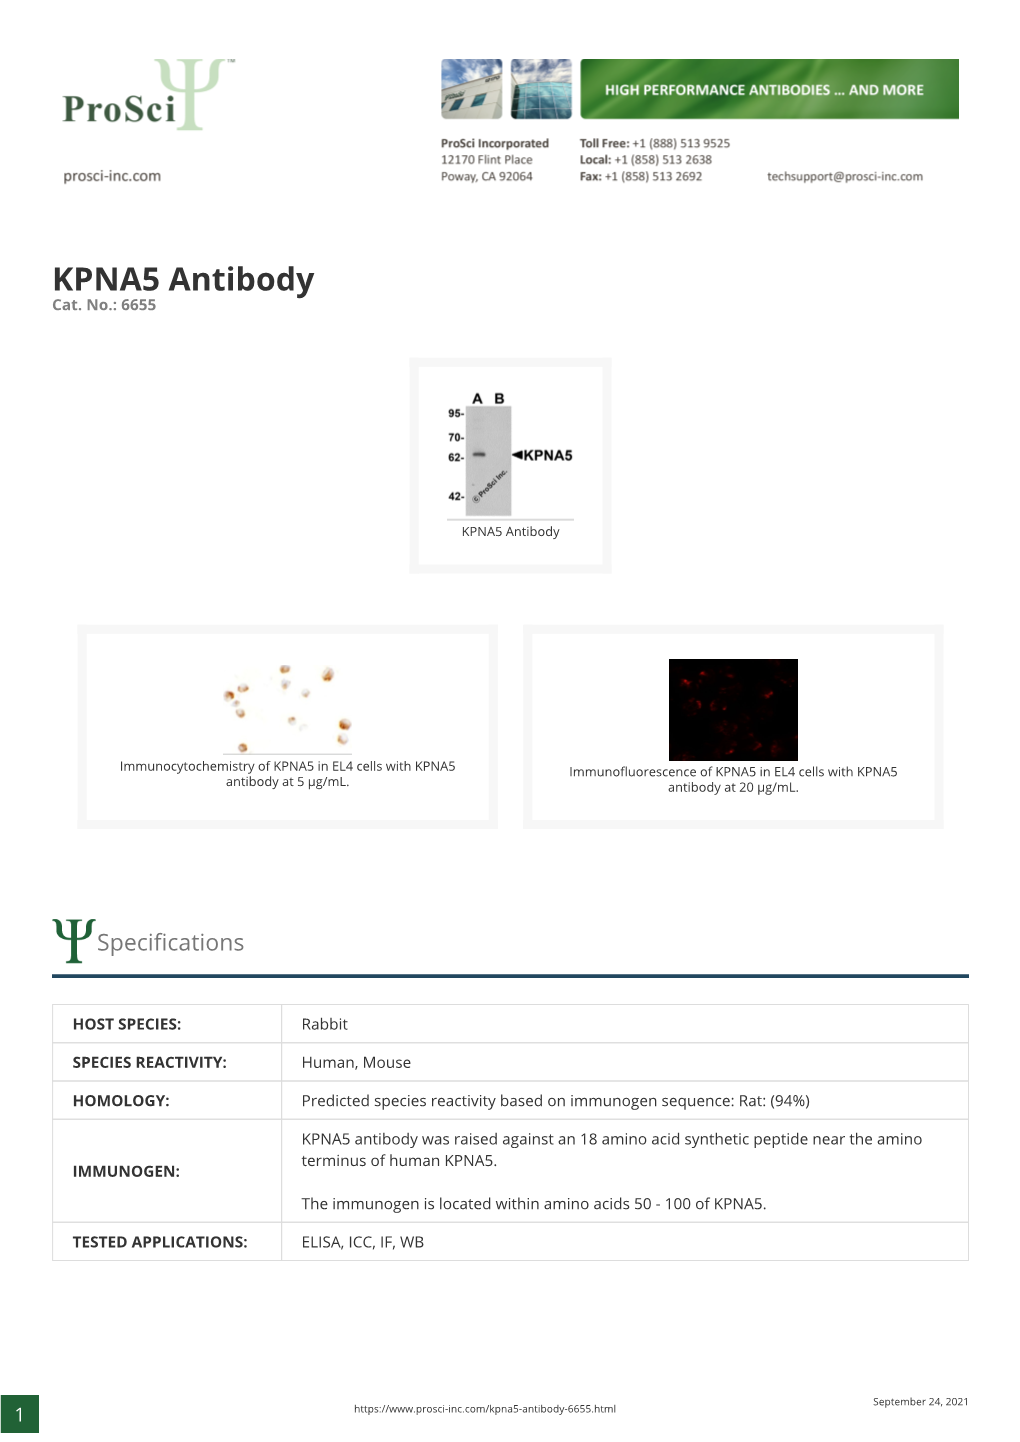 KPNA5 Antibody Cat